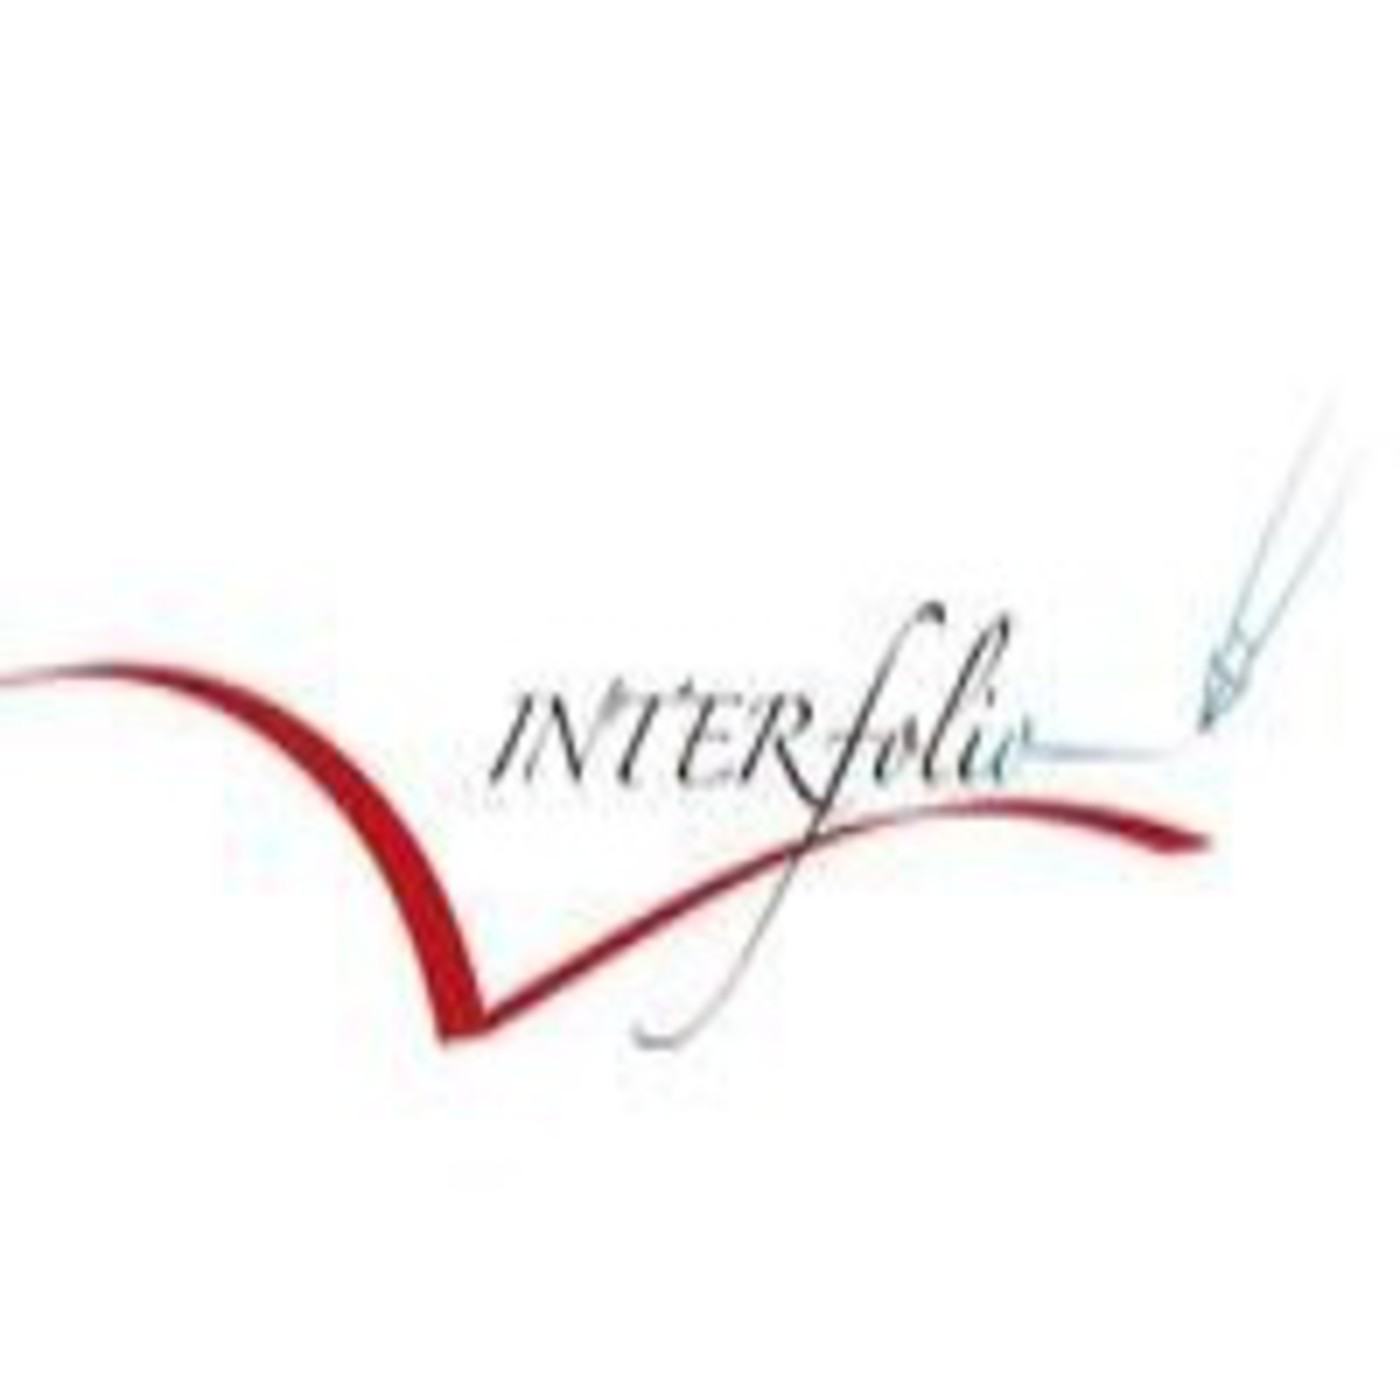 Entrevista INTERFOLIO